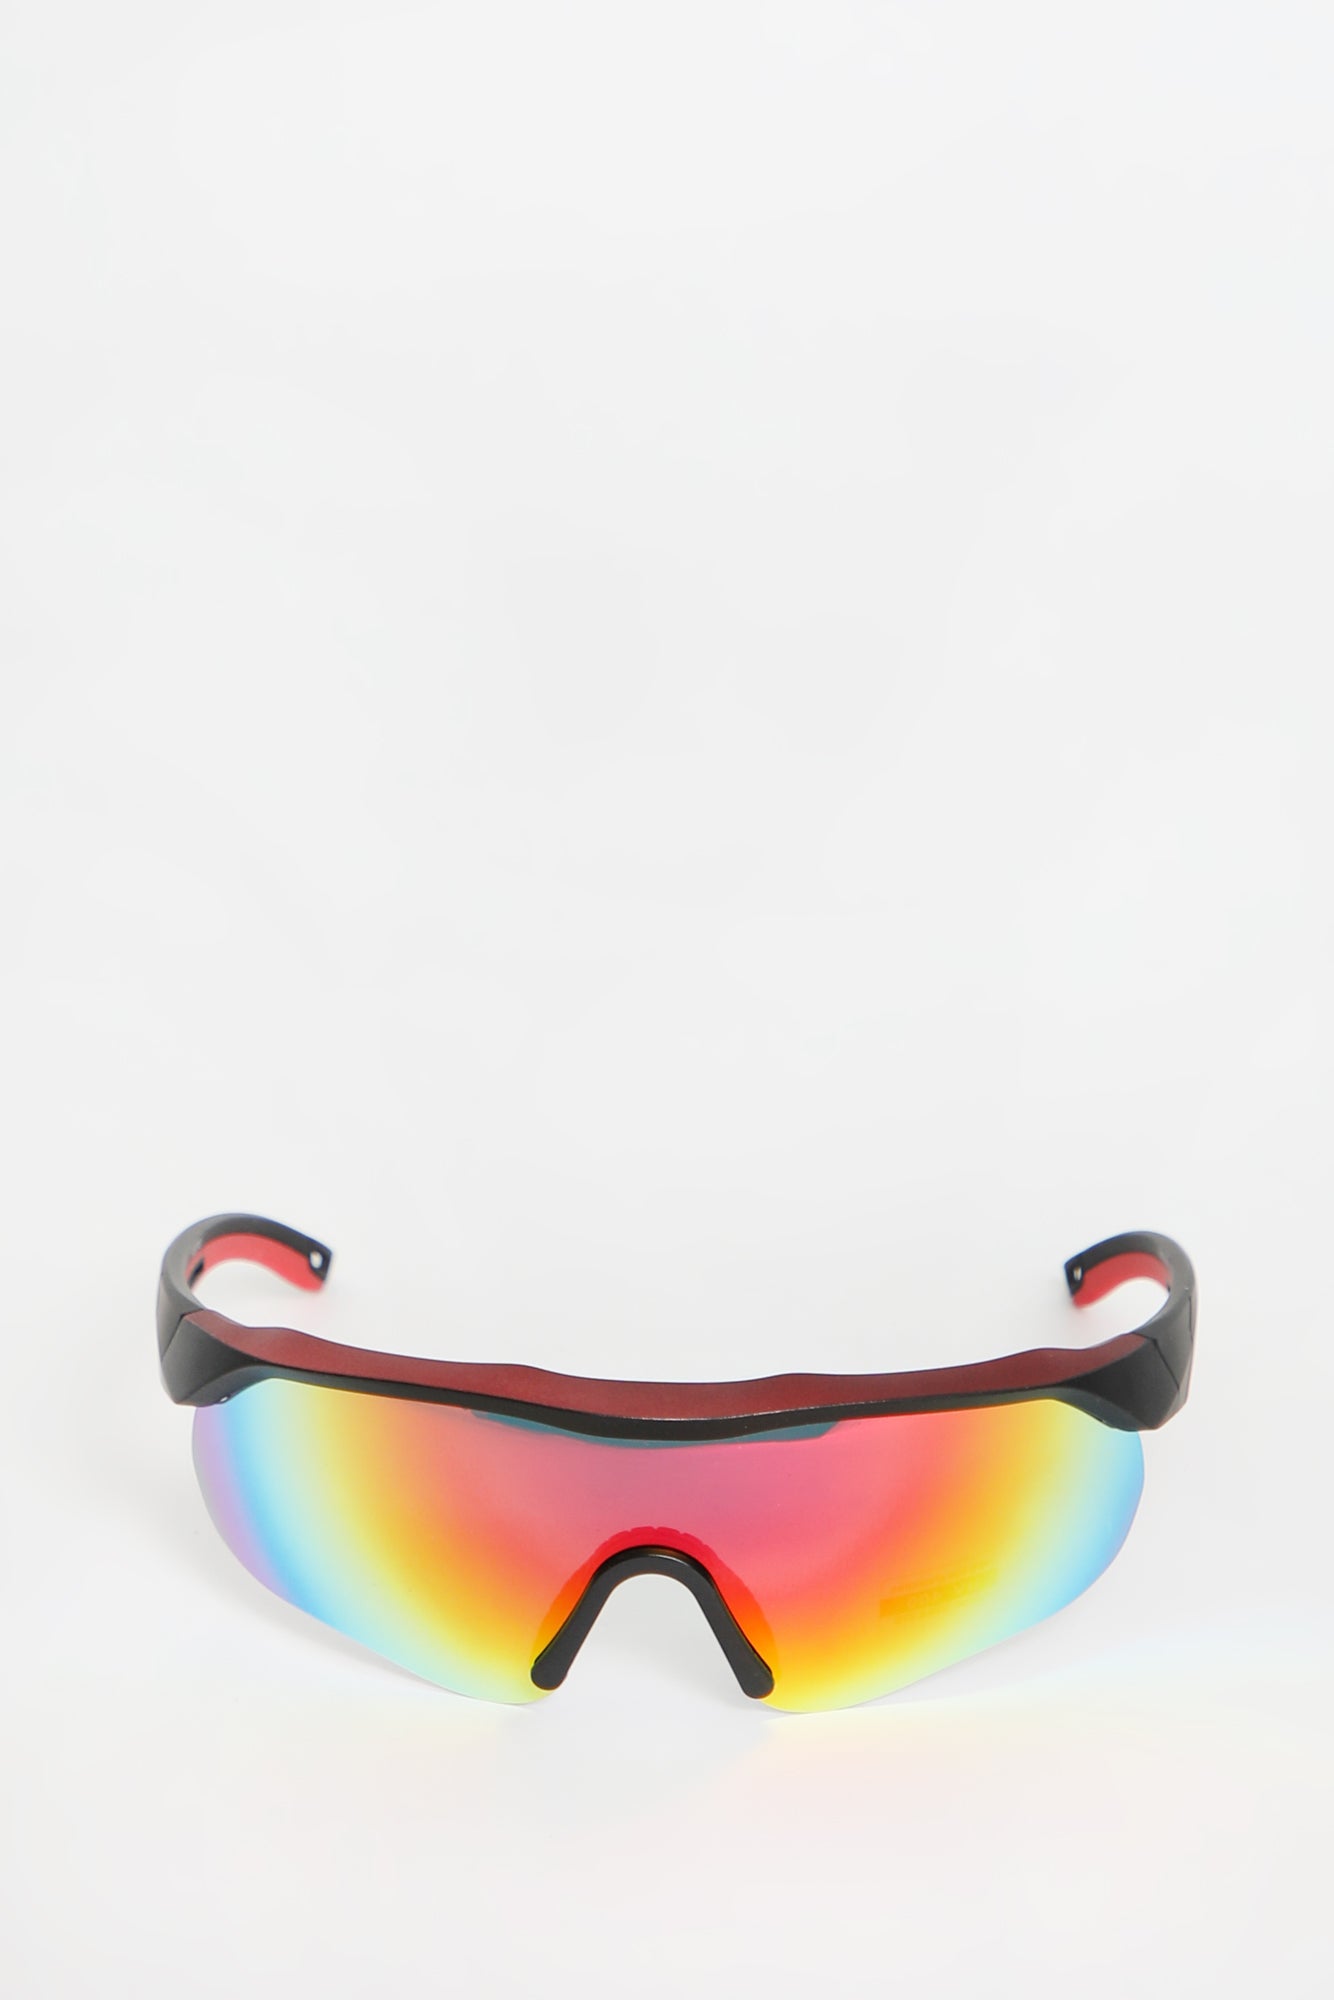 West49 Mirror Sport Sunglasses - Black / O/S